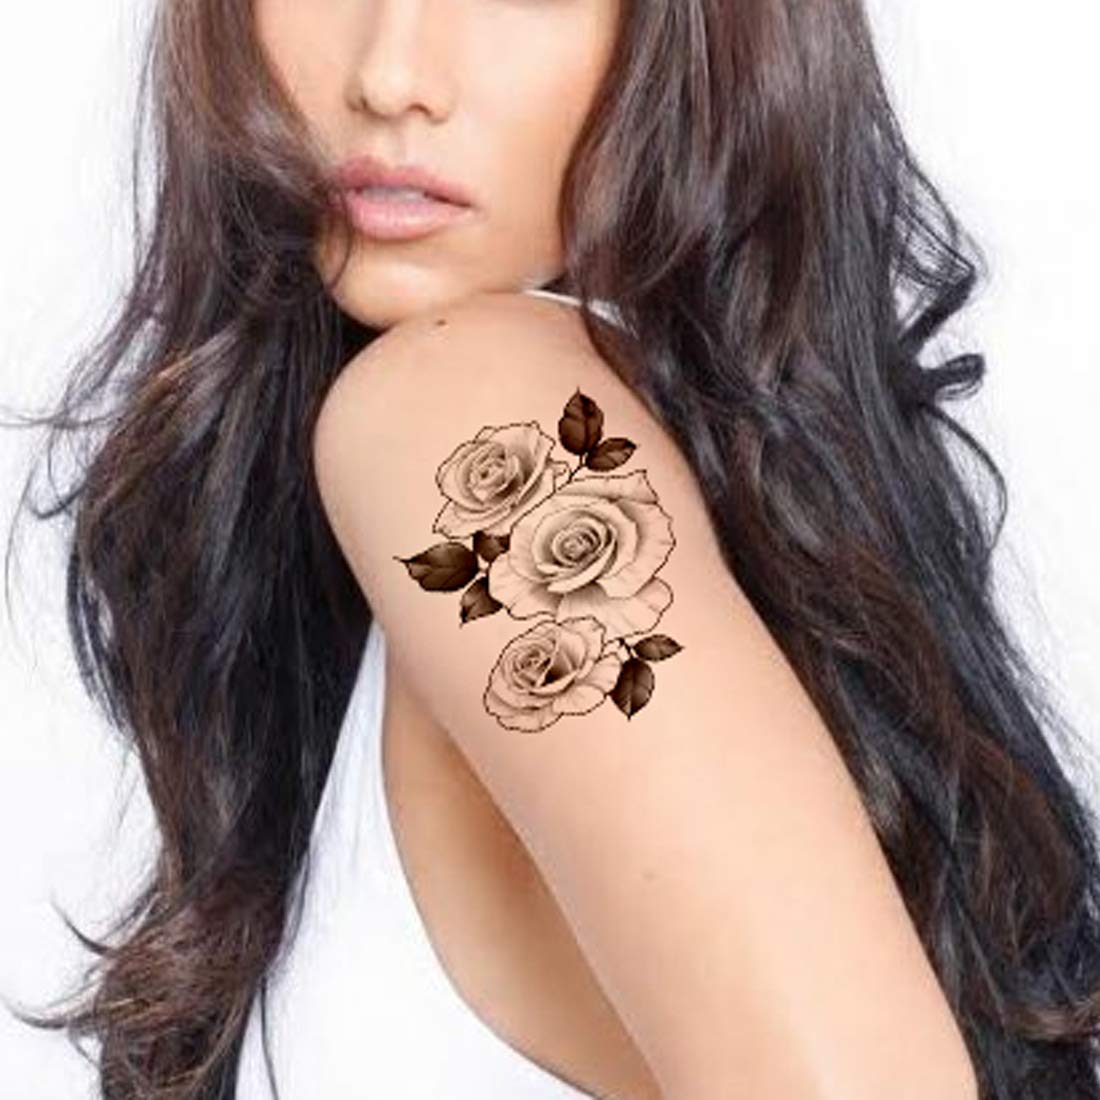 Explore Stunning Rose Tattoo Designs For Women